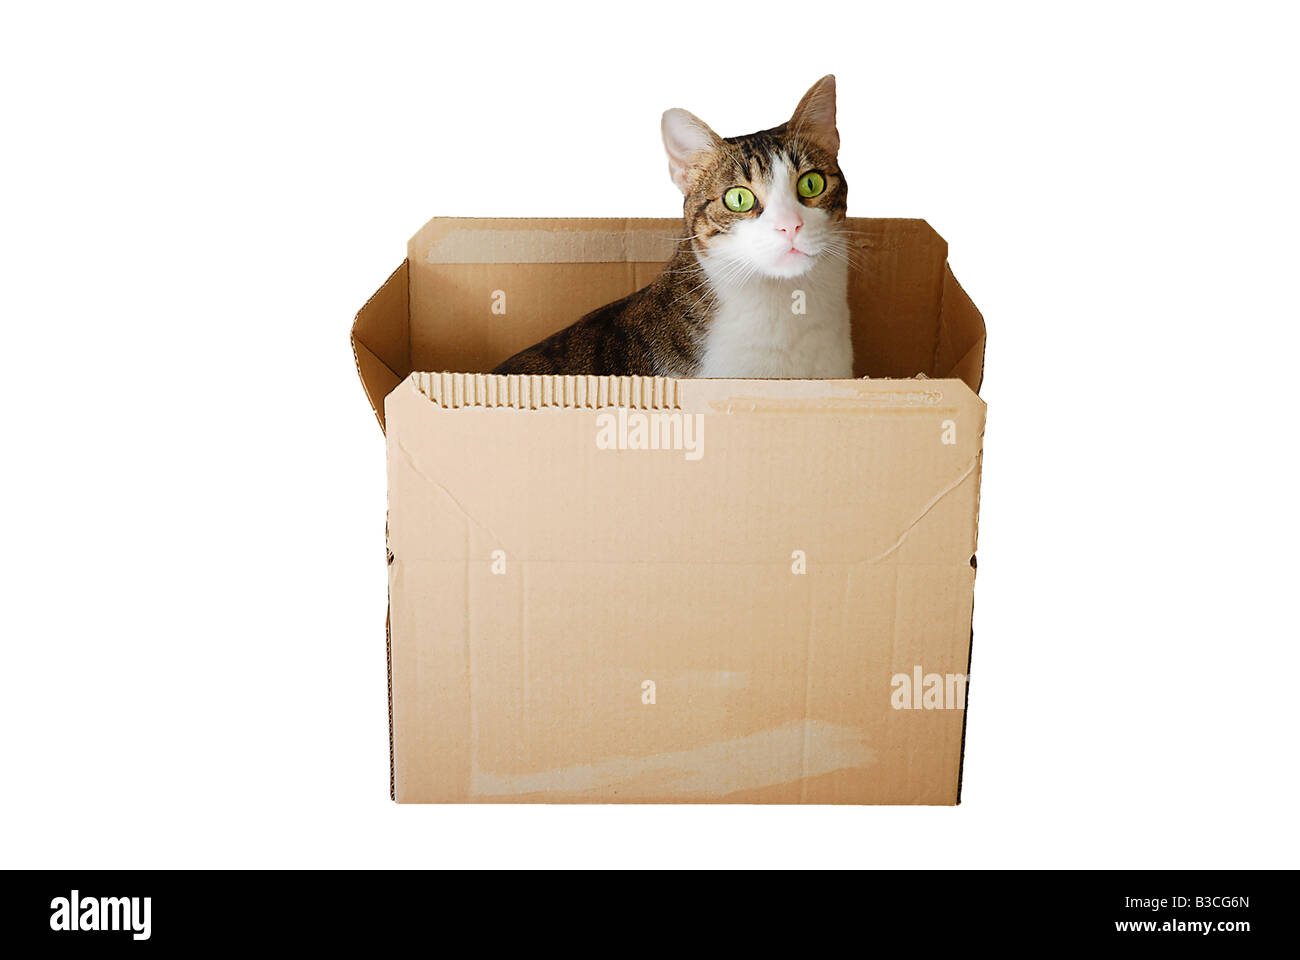 Tabby and white cat inside cardboard box. Stock Photo